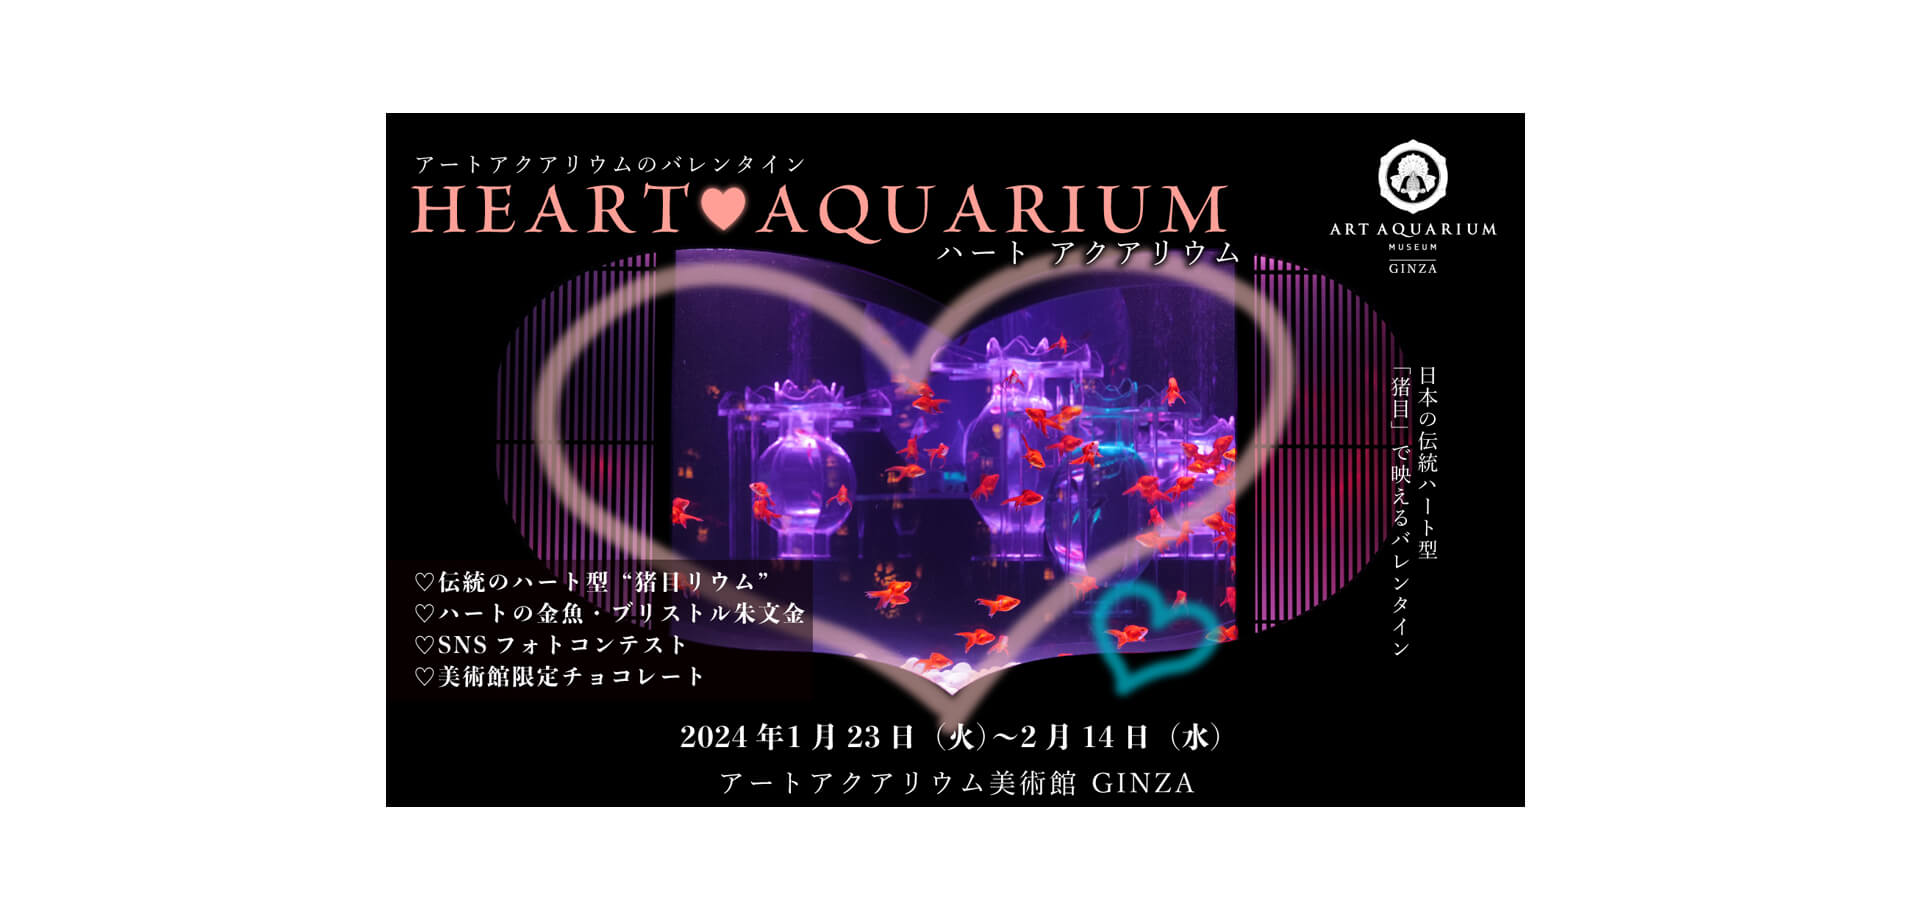 Heart Aquarium アートアクアリウム美術館 GINZA